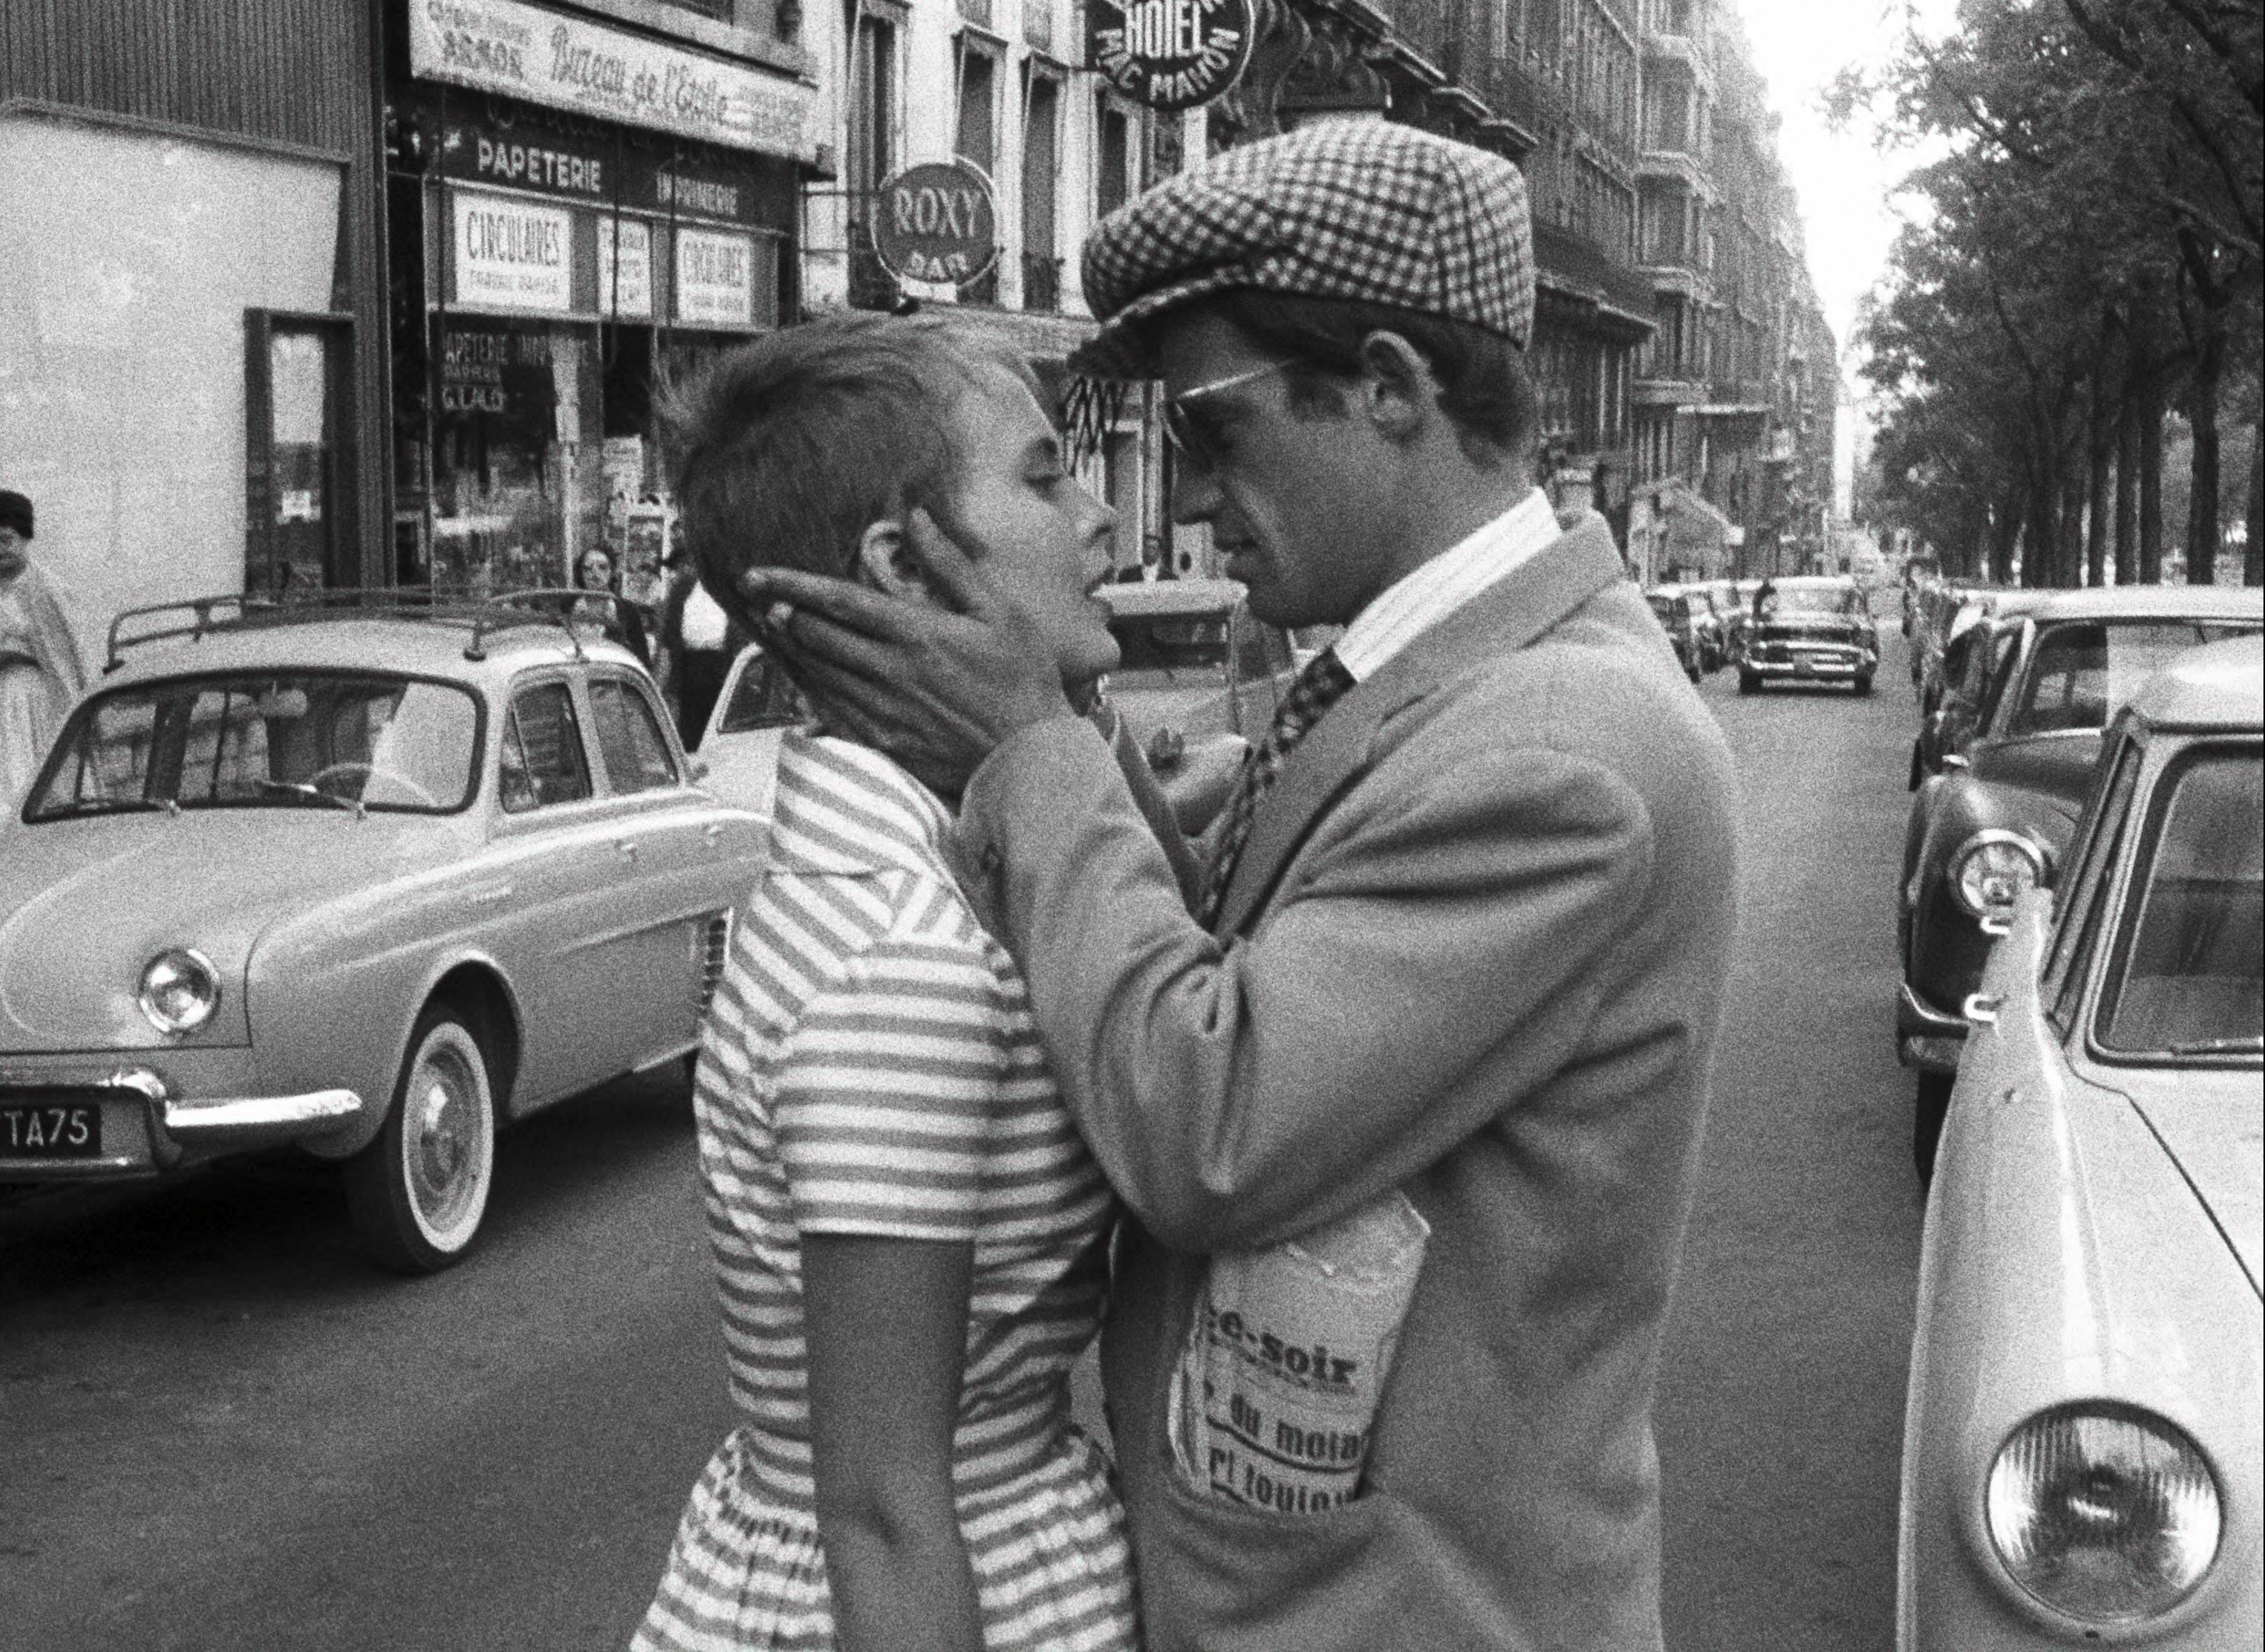 "A bout de souffle", Jean-Luc Godard, 1960